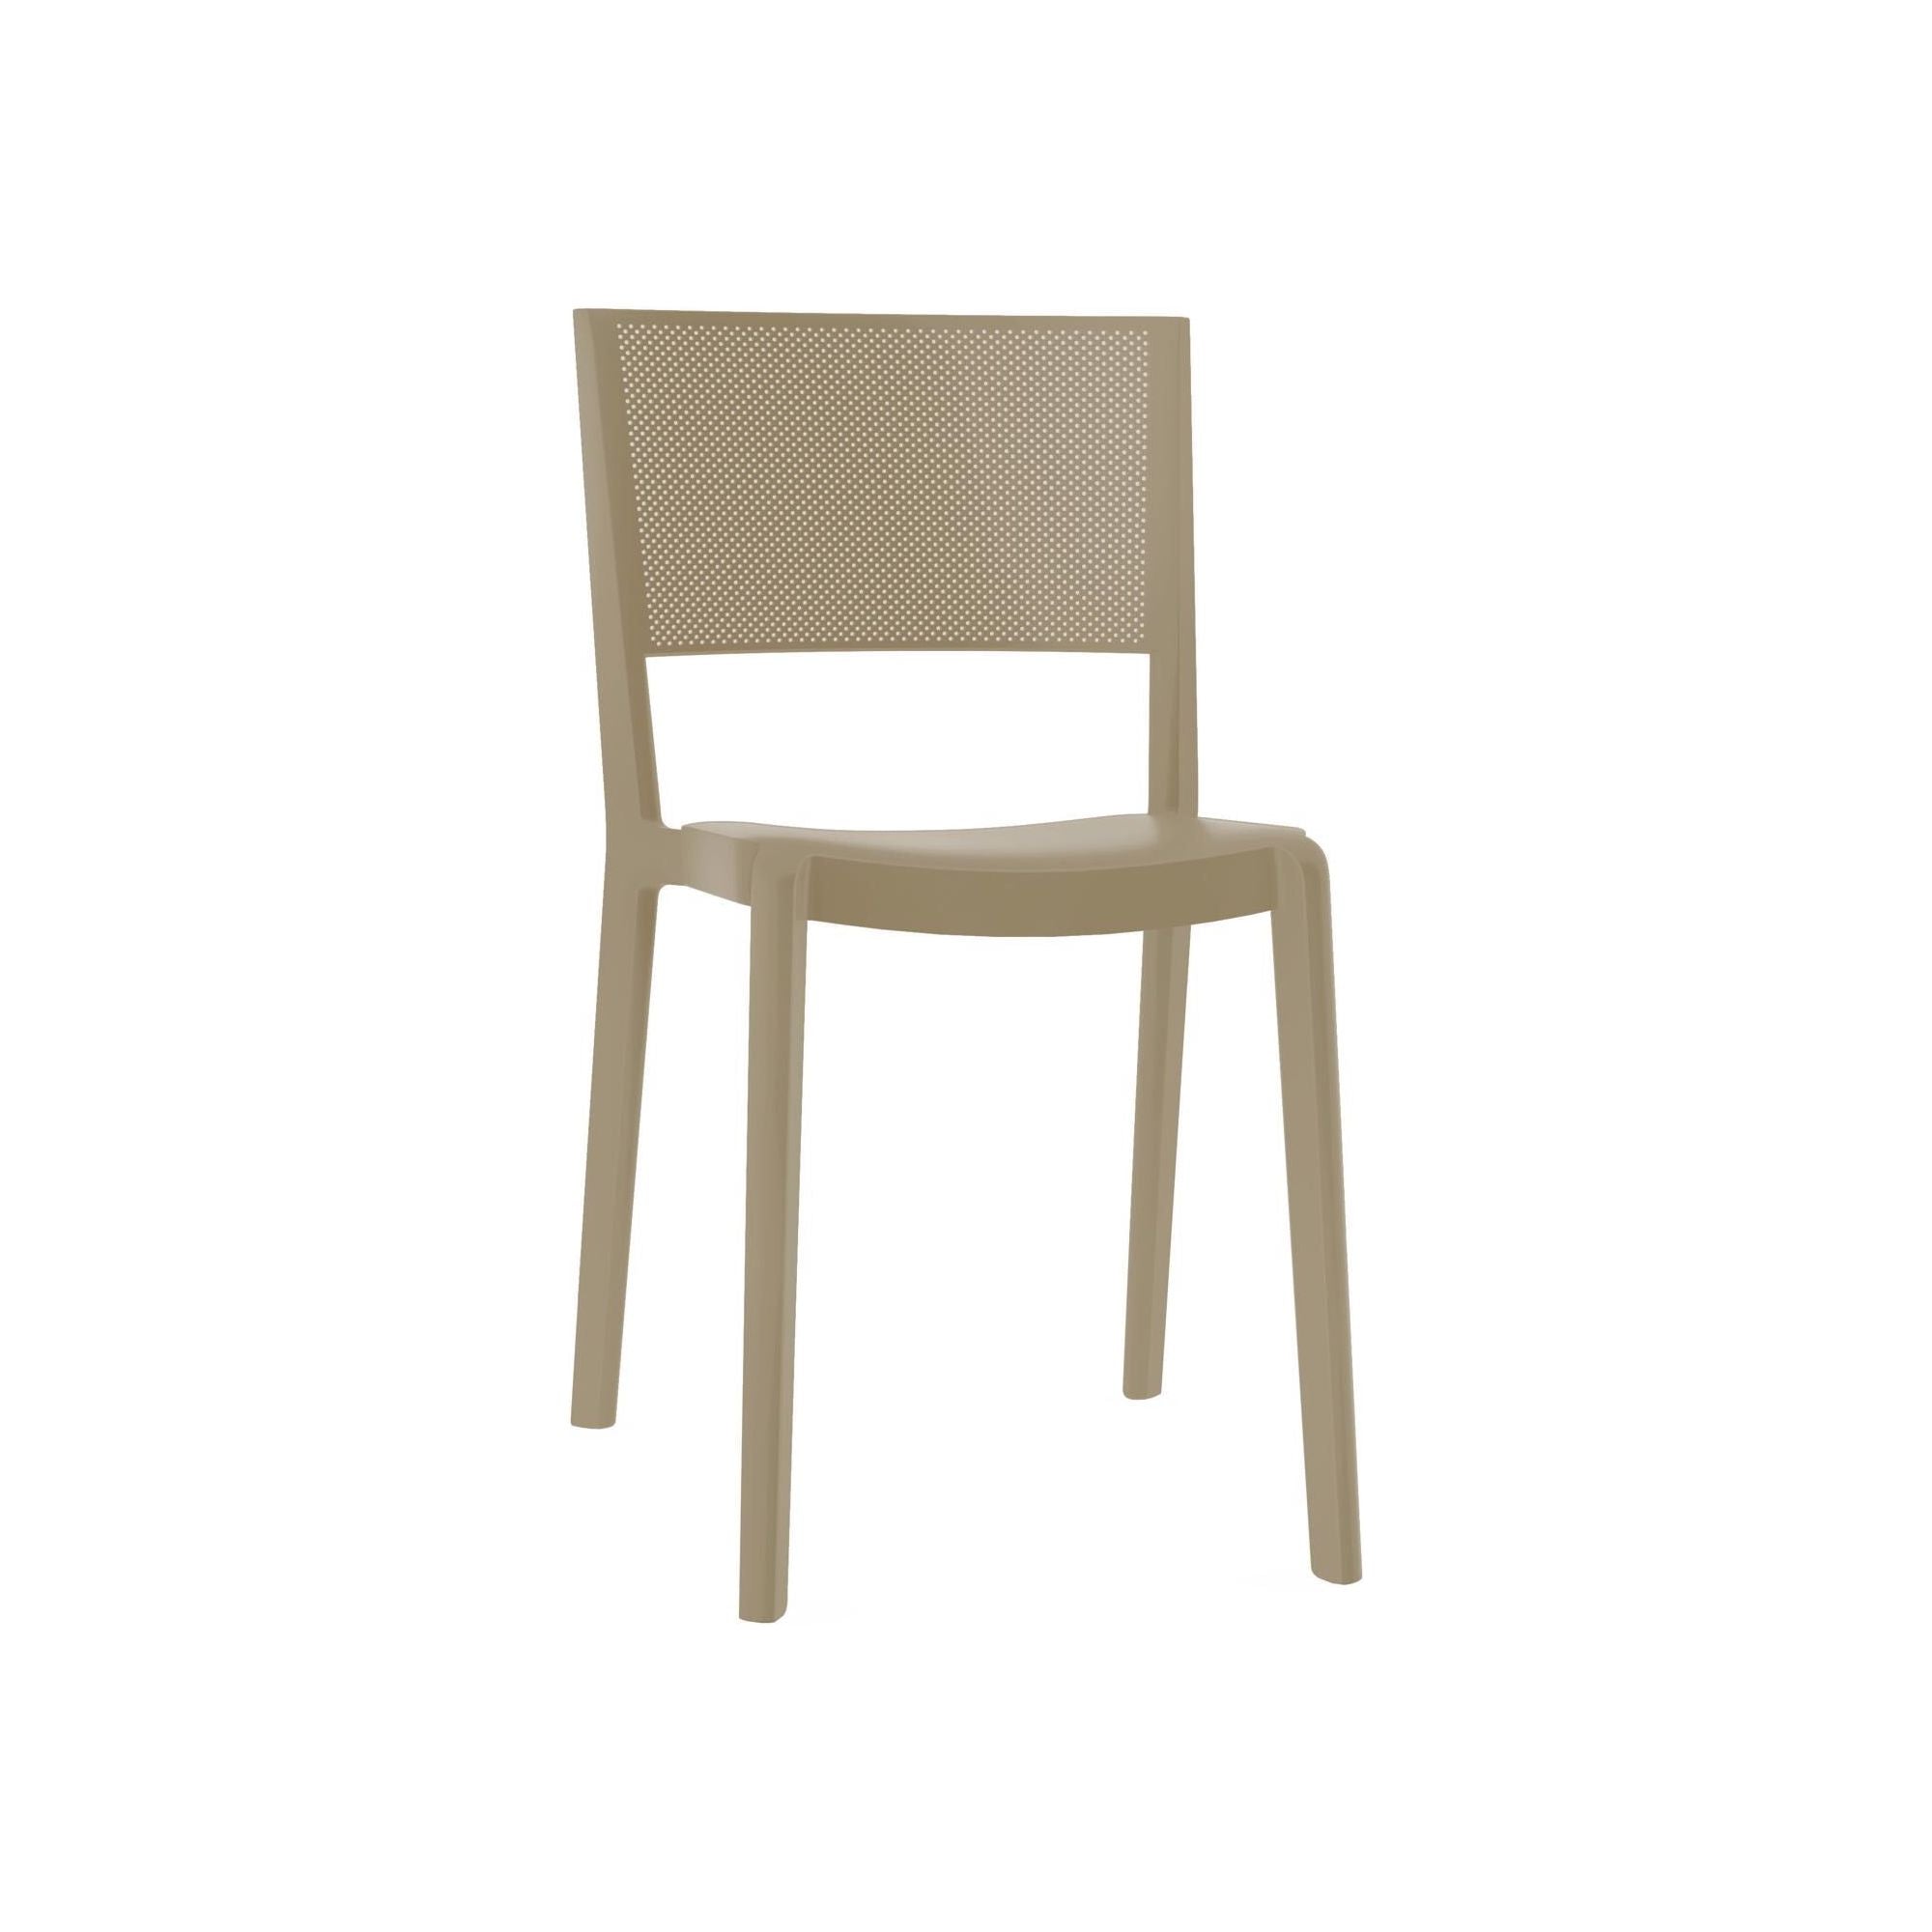 Resol spot chair inside, sand outside